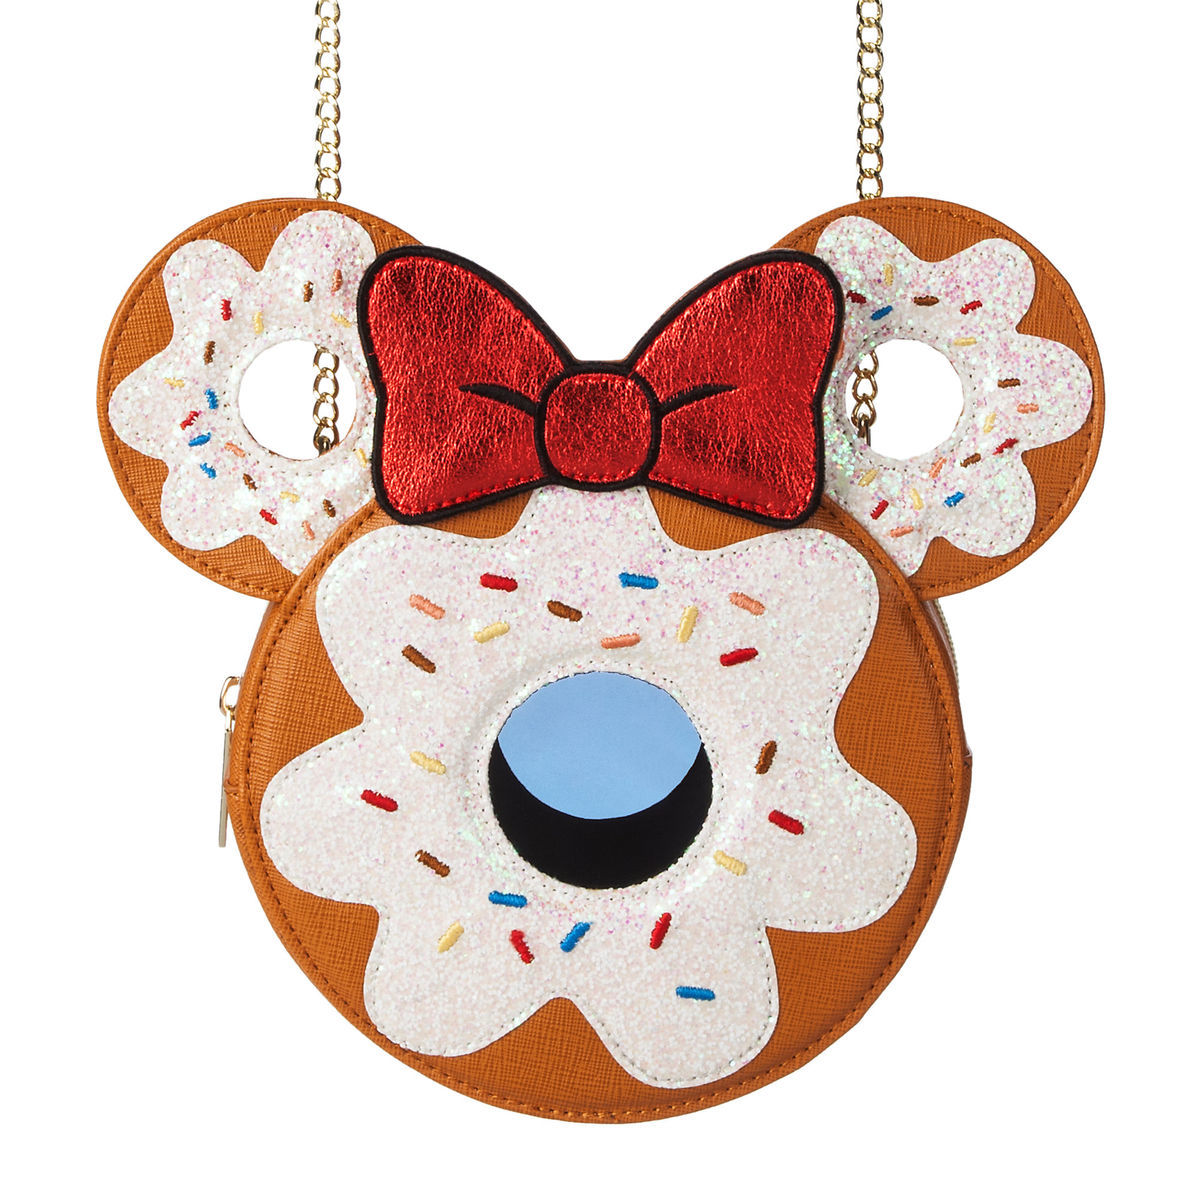 Disney Parks Minnie Donut Crossbody Bag by Danielle Nicole New with Tags